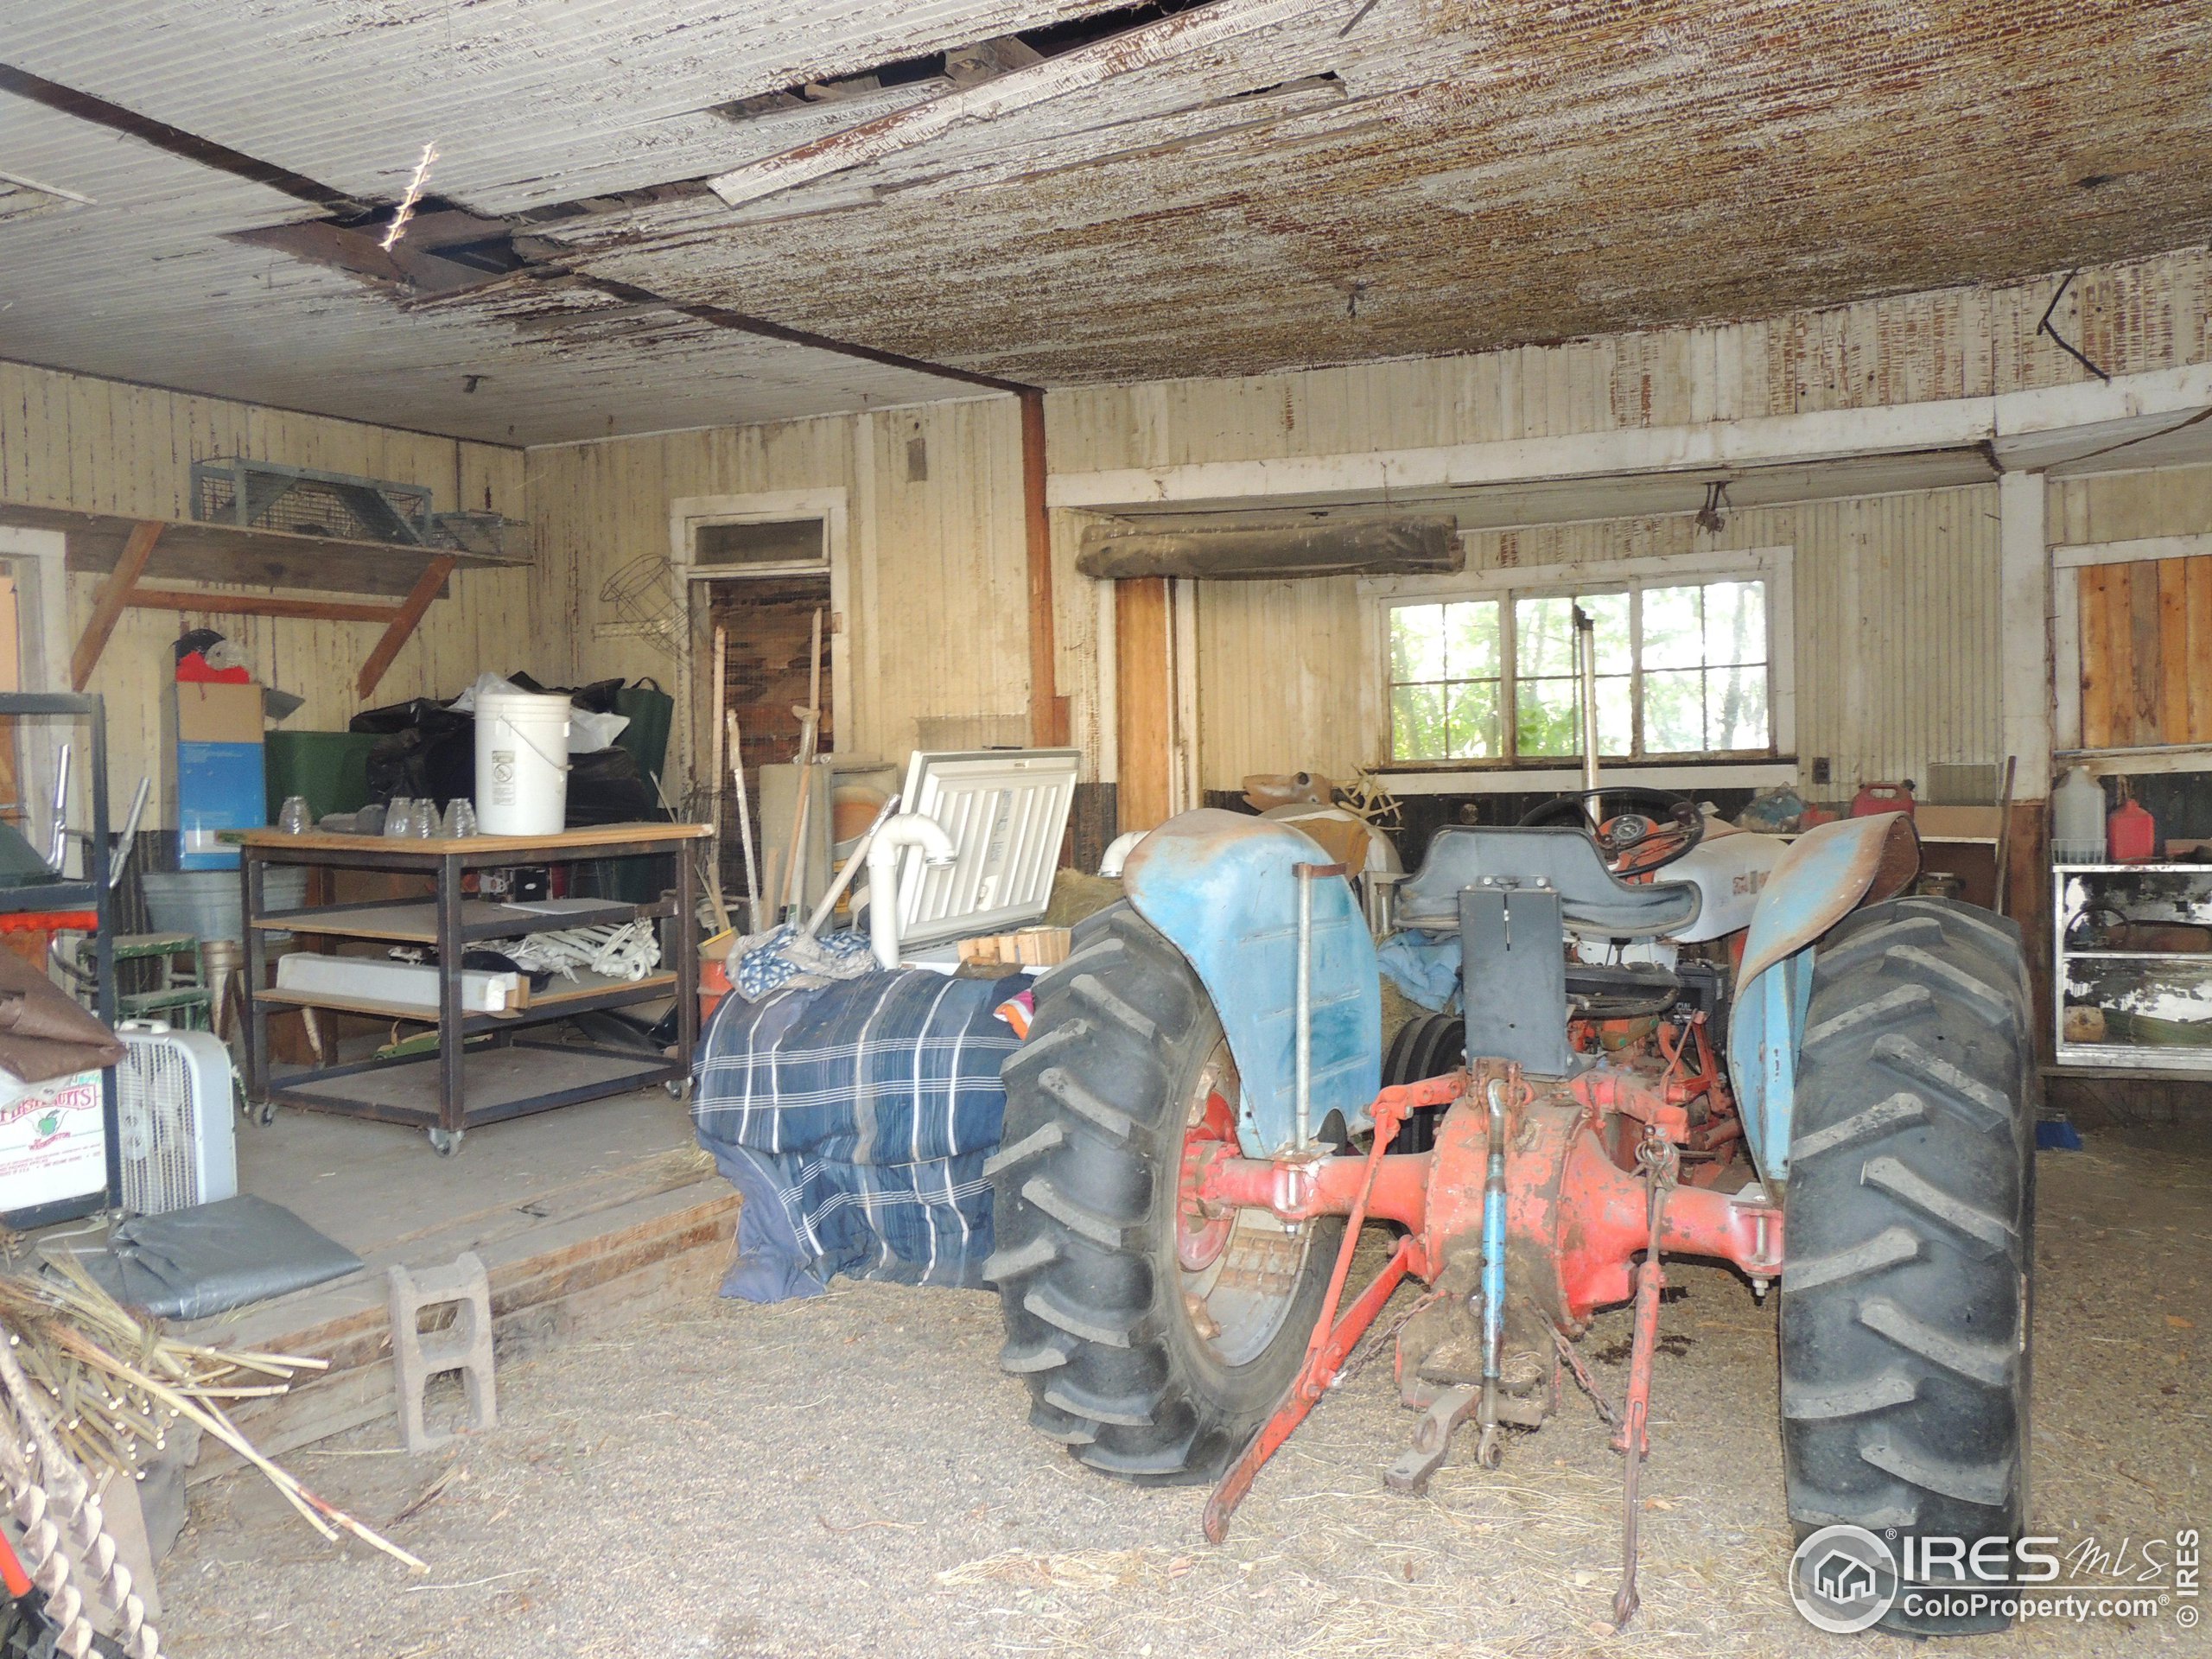 Inside barn